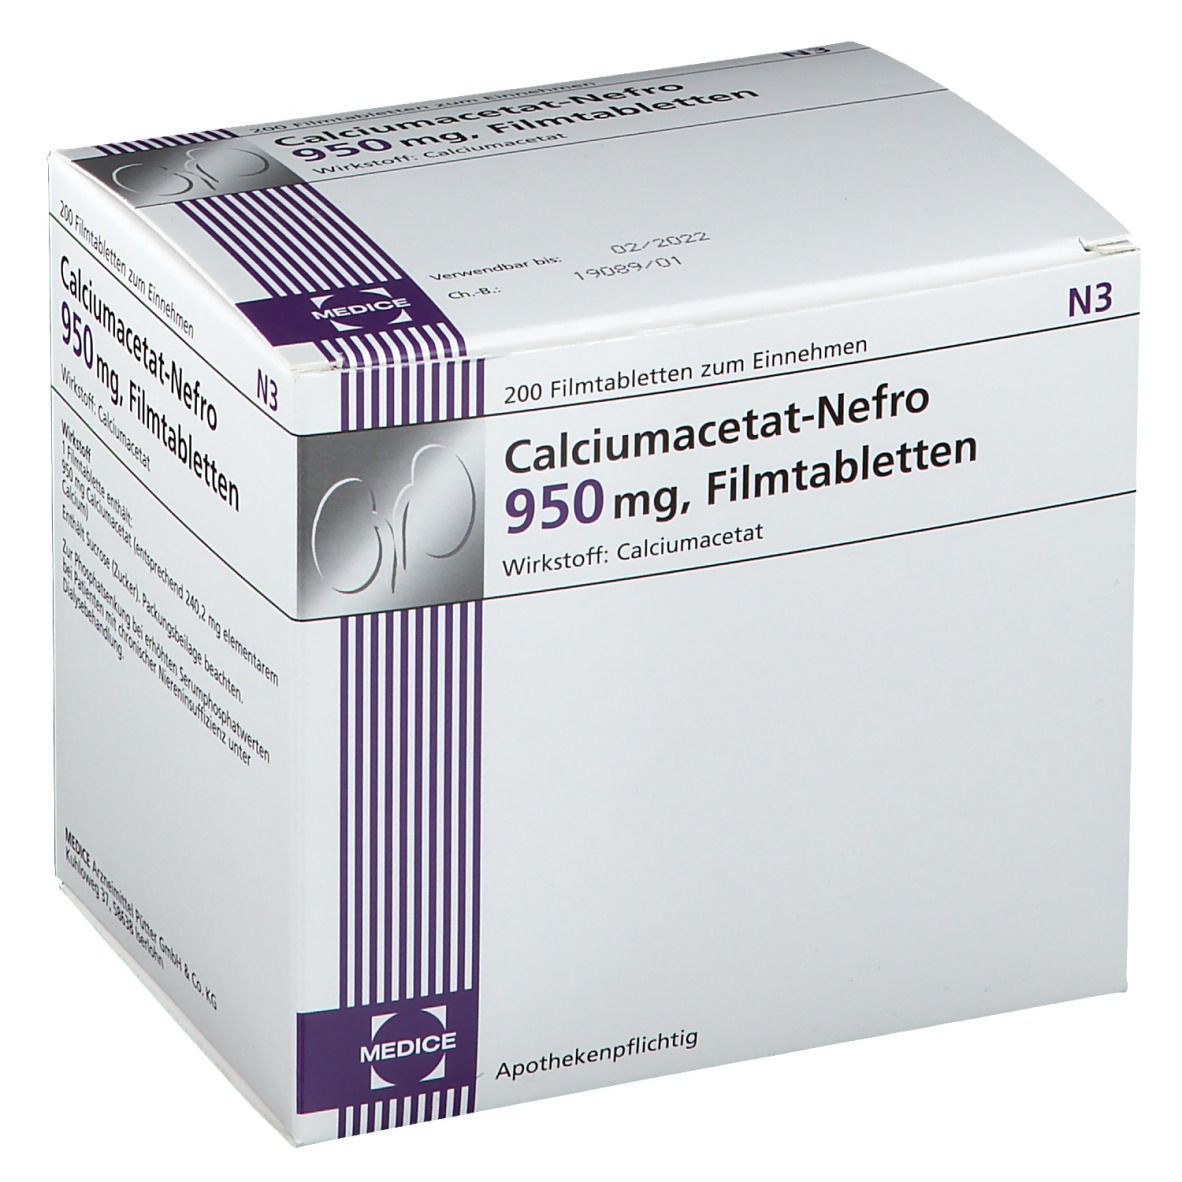 Calciumacetat-Nefro 950 mg